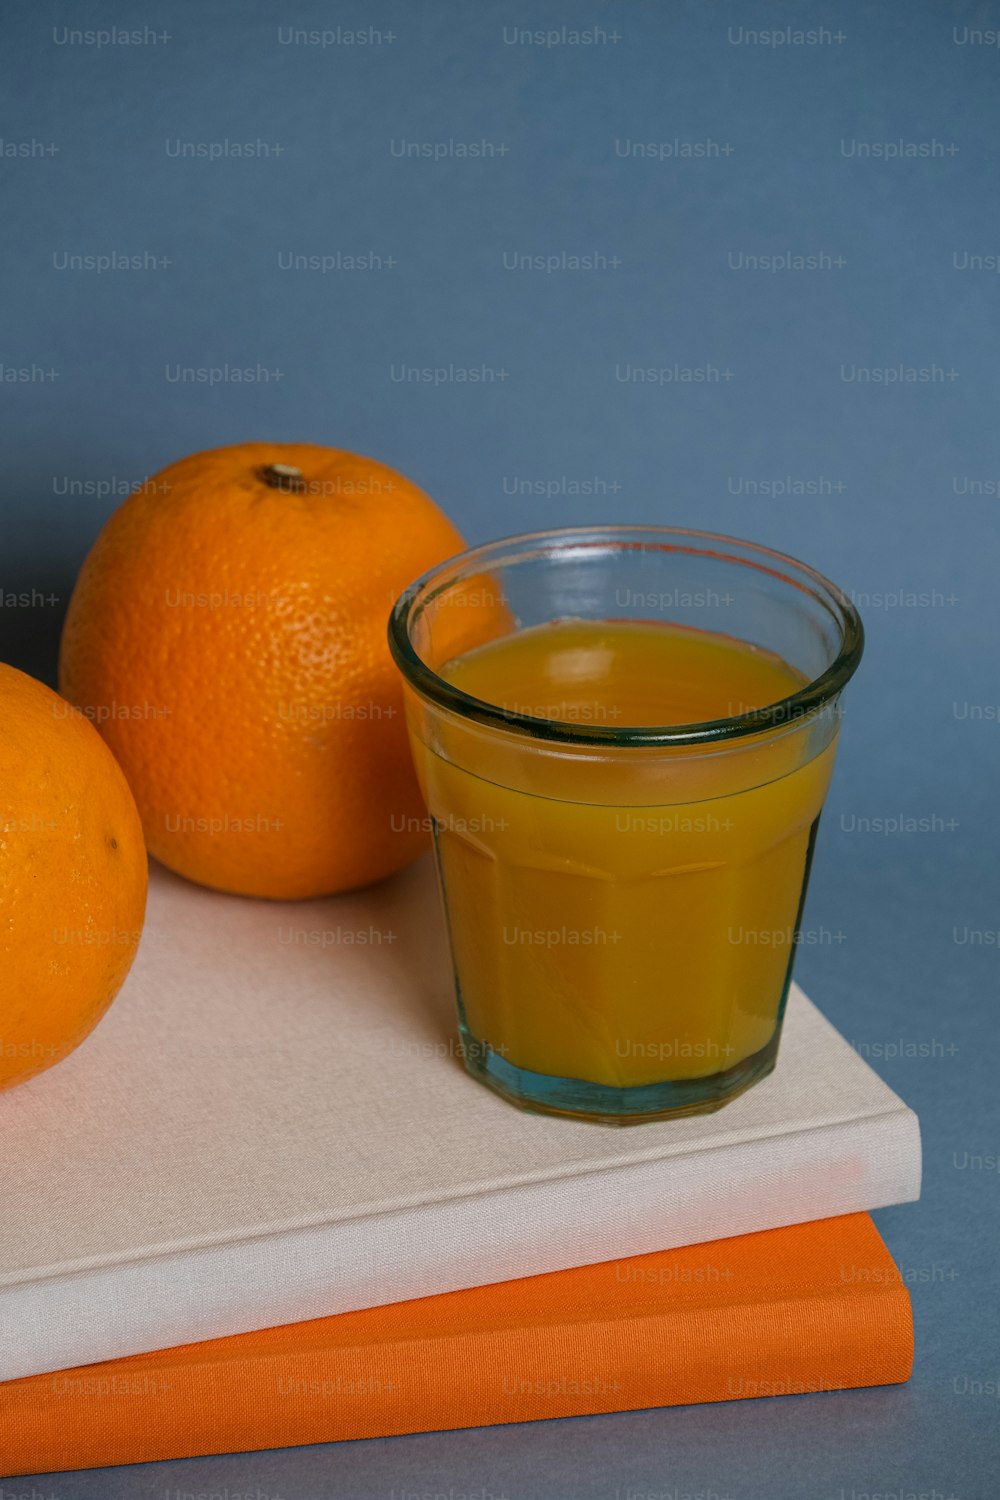 a glass of orange juice next to two oranges